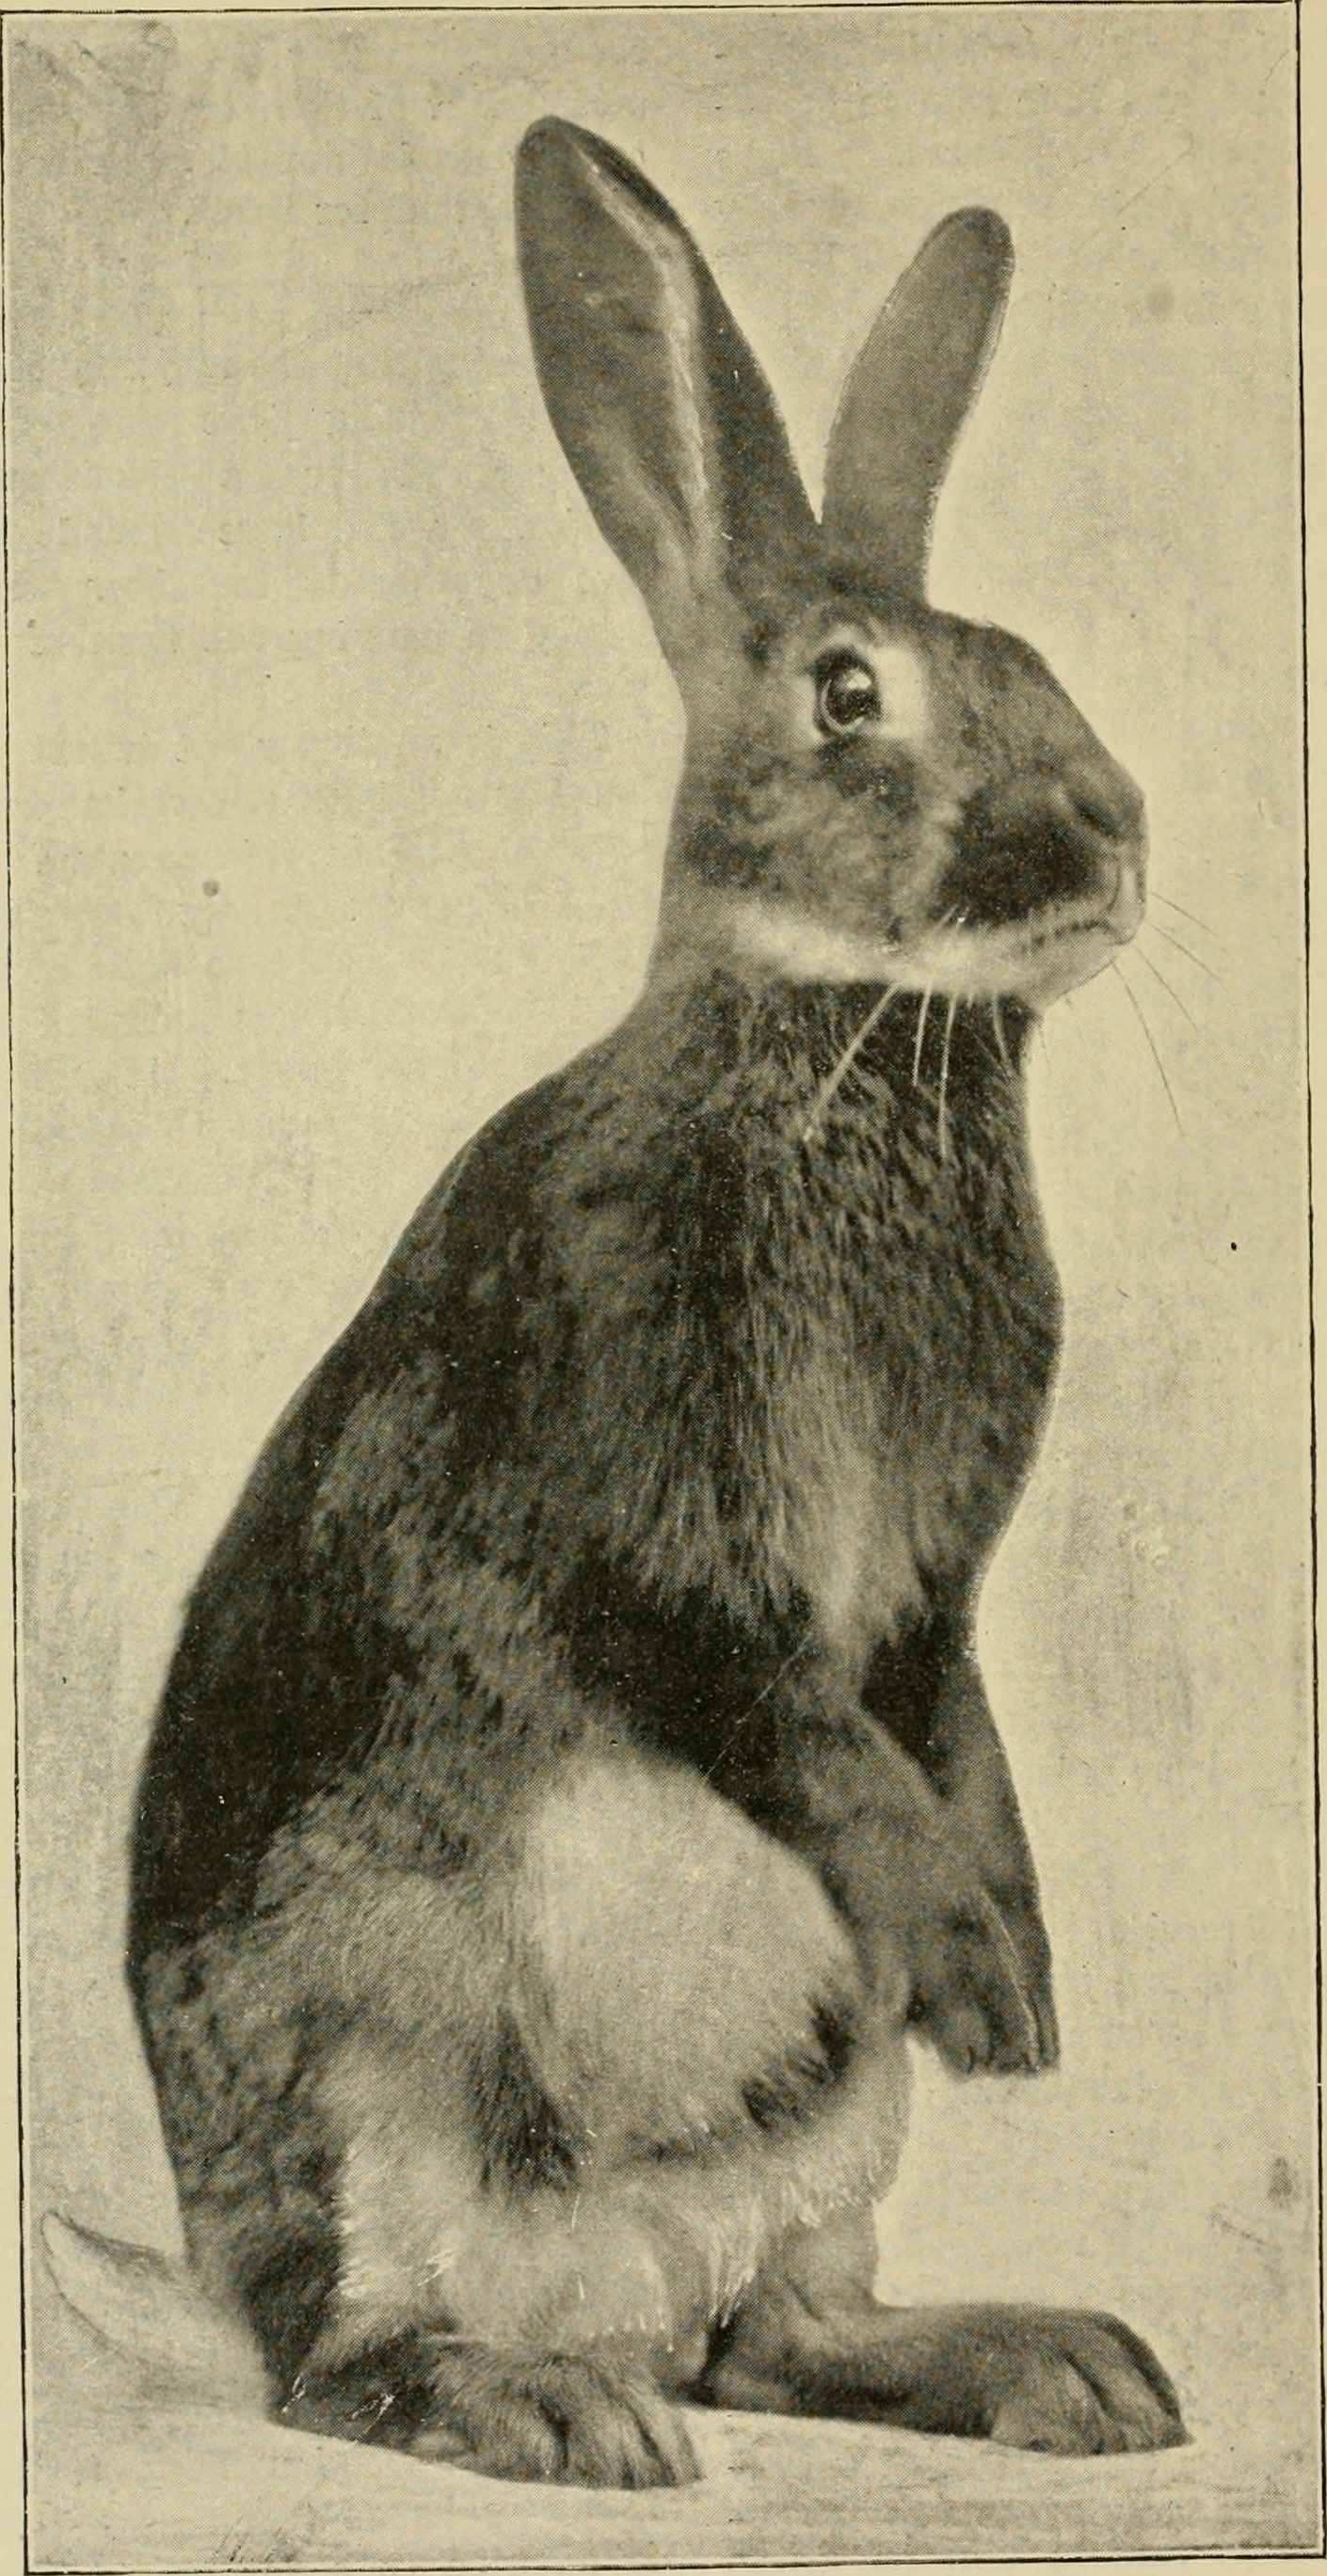 File:Rabbit pelt tanned.jpg - Wikipedia